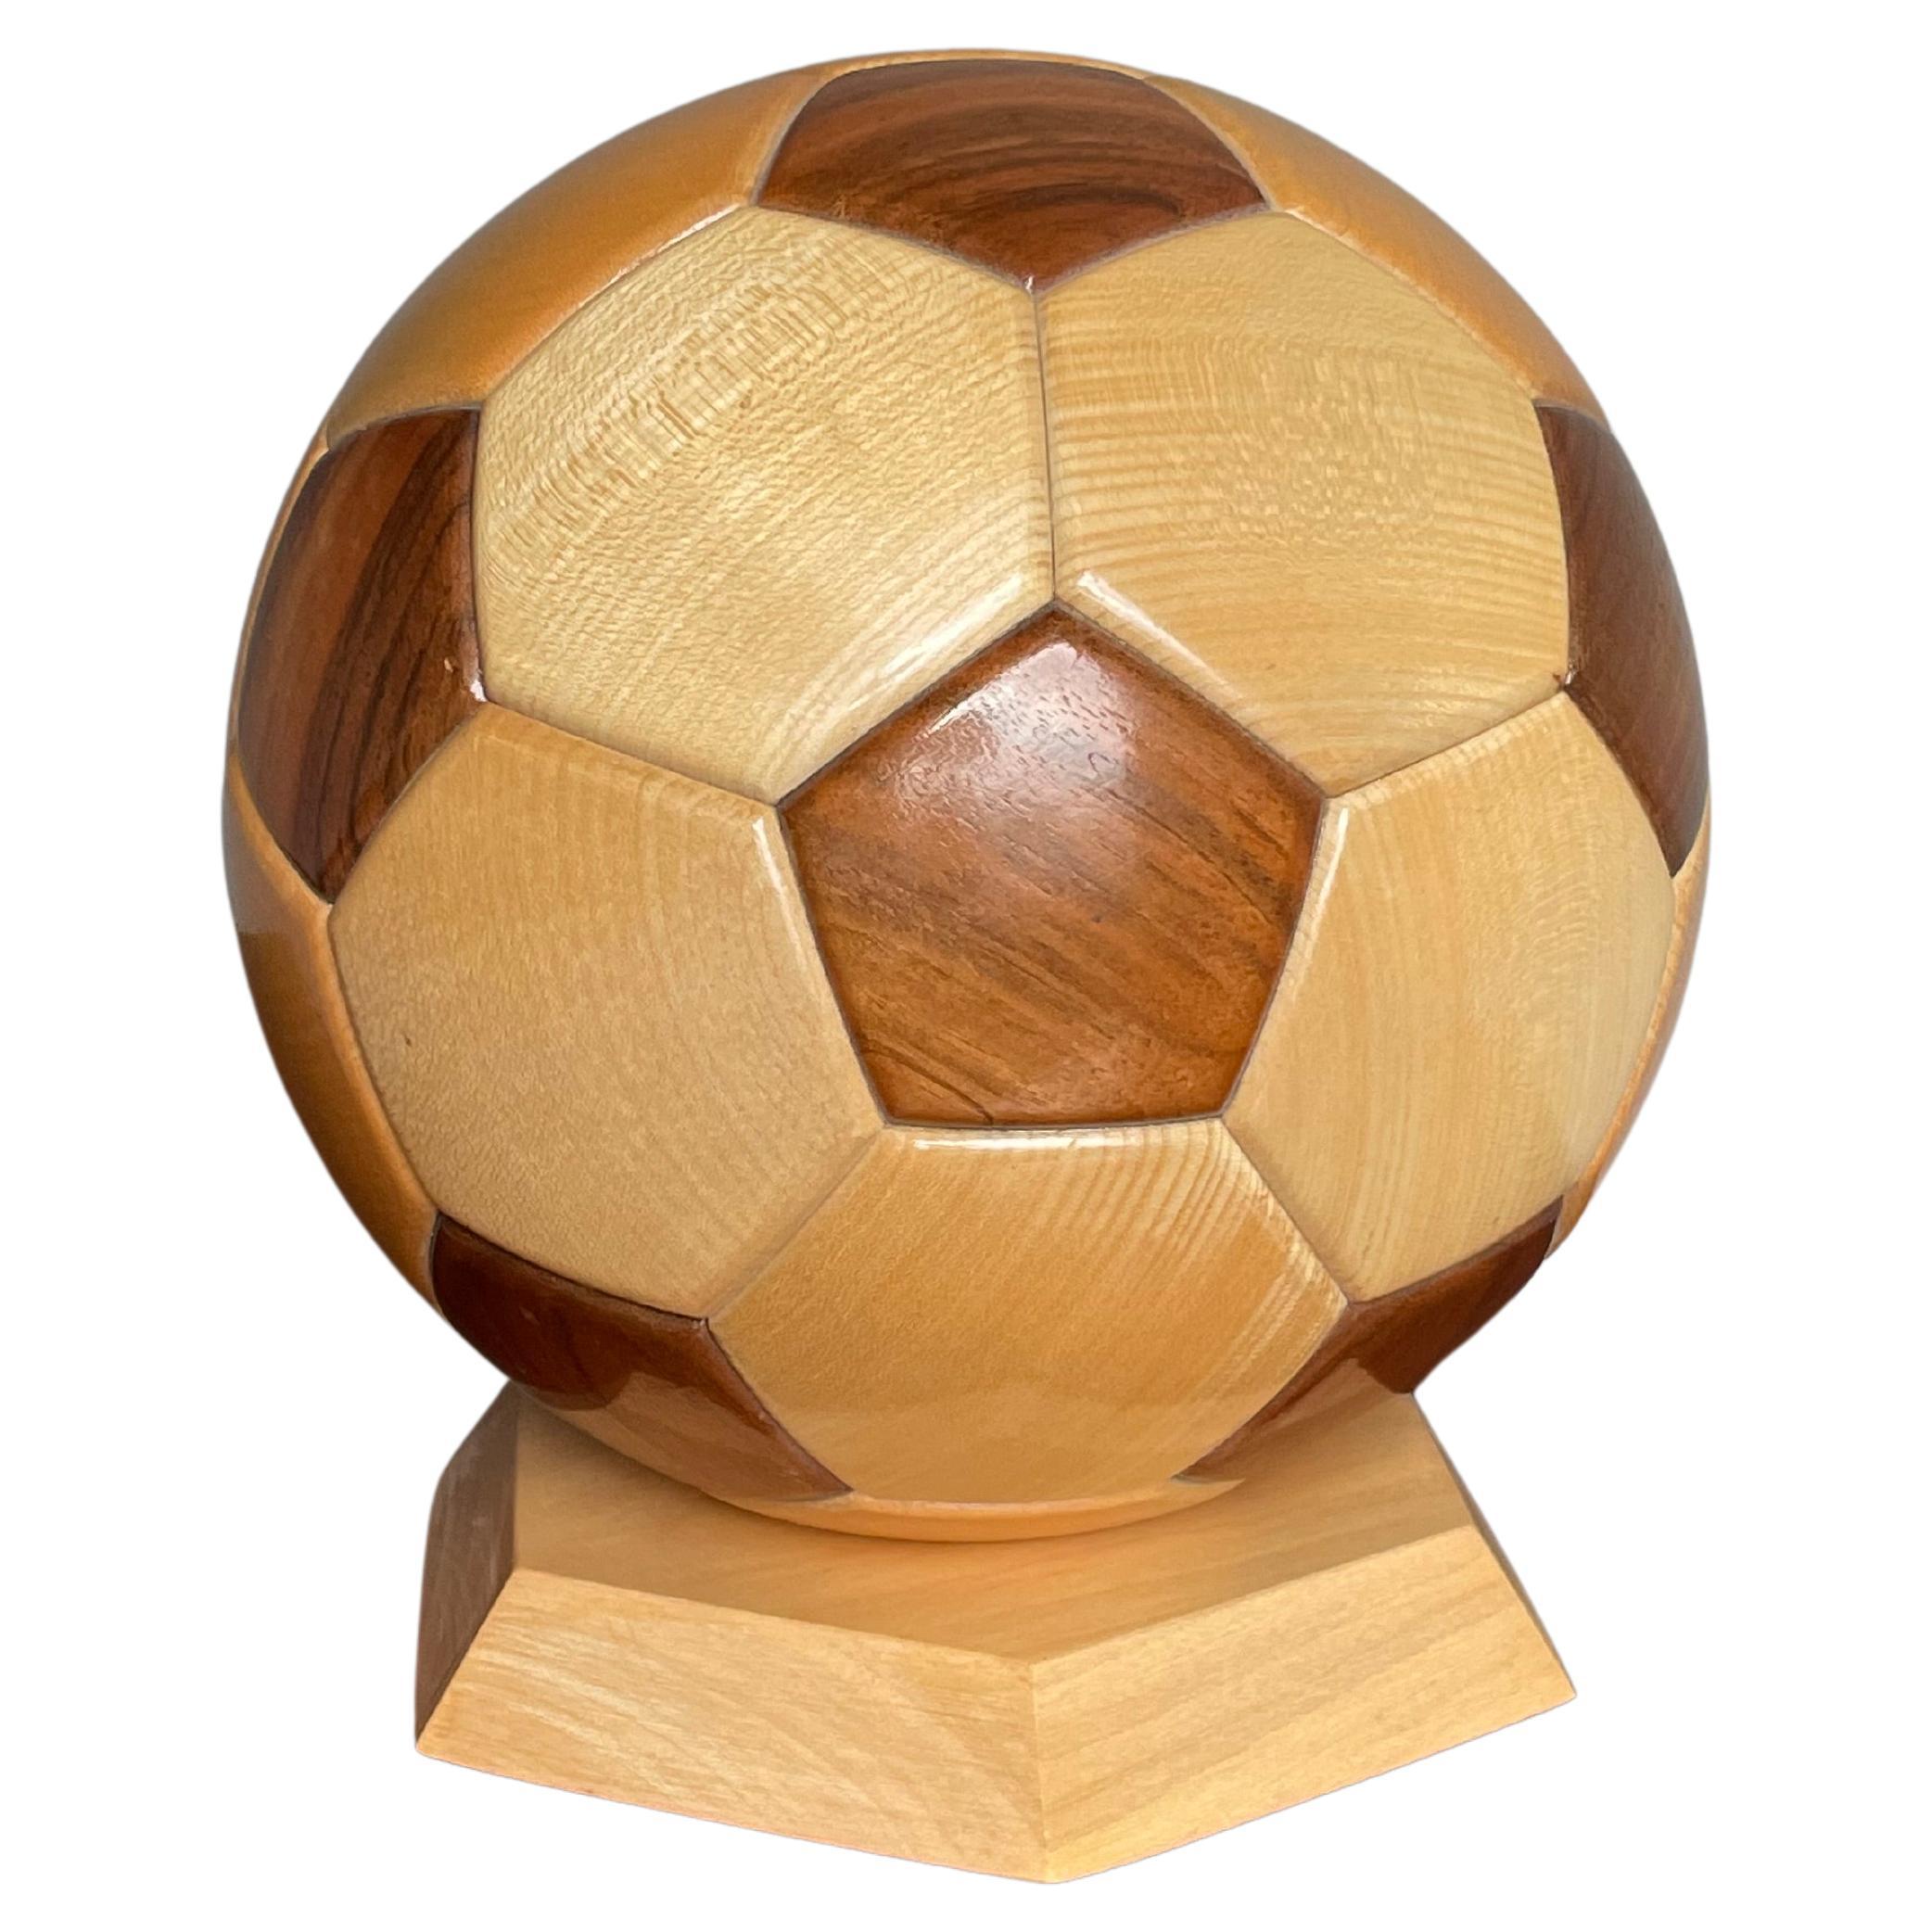 All Handmade Vintage 1980s Wooden Soccer Ball / Football Sculpture / Desk Piece For Sale